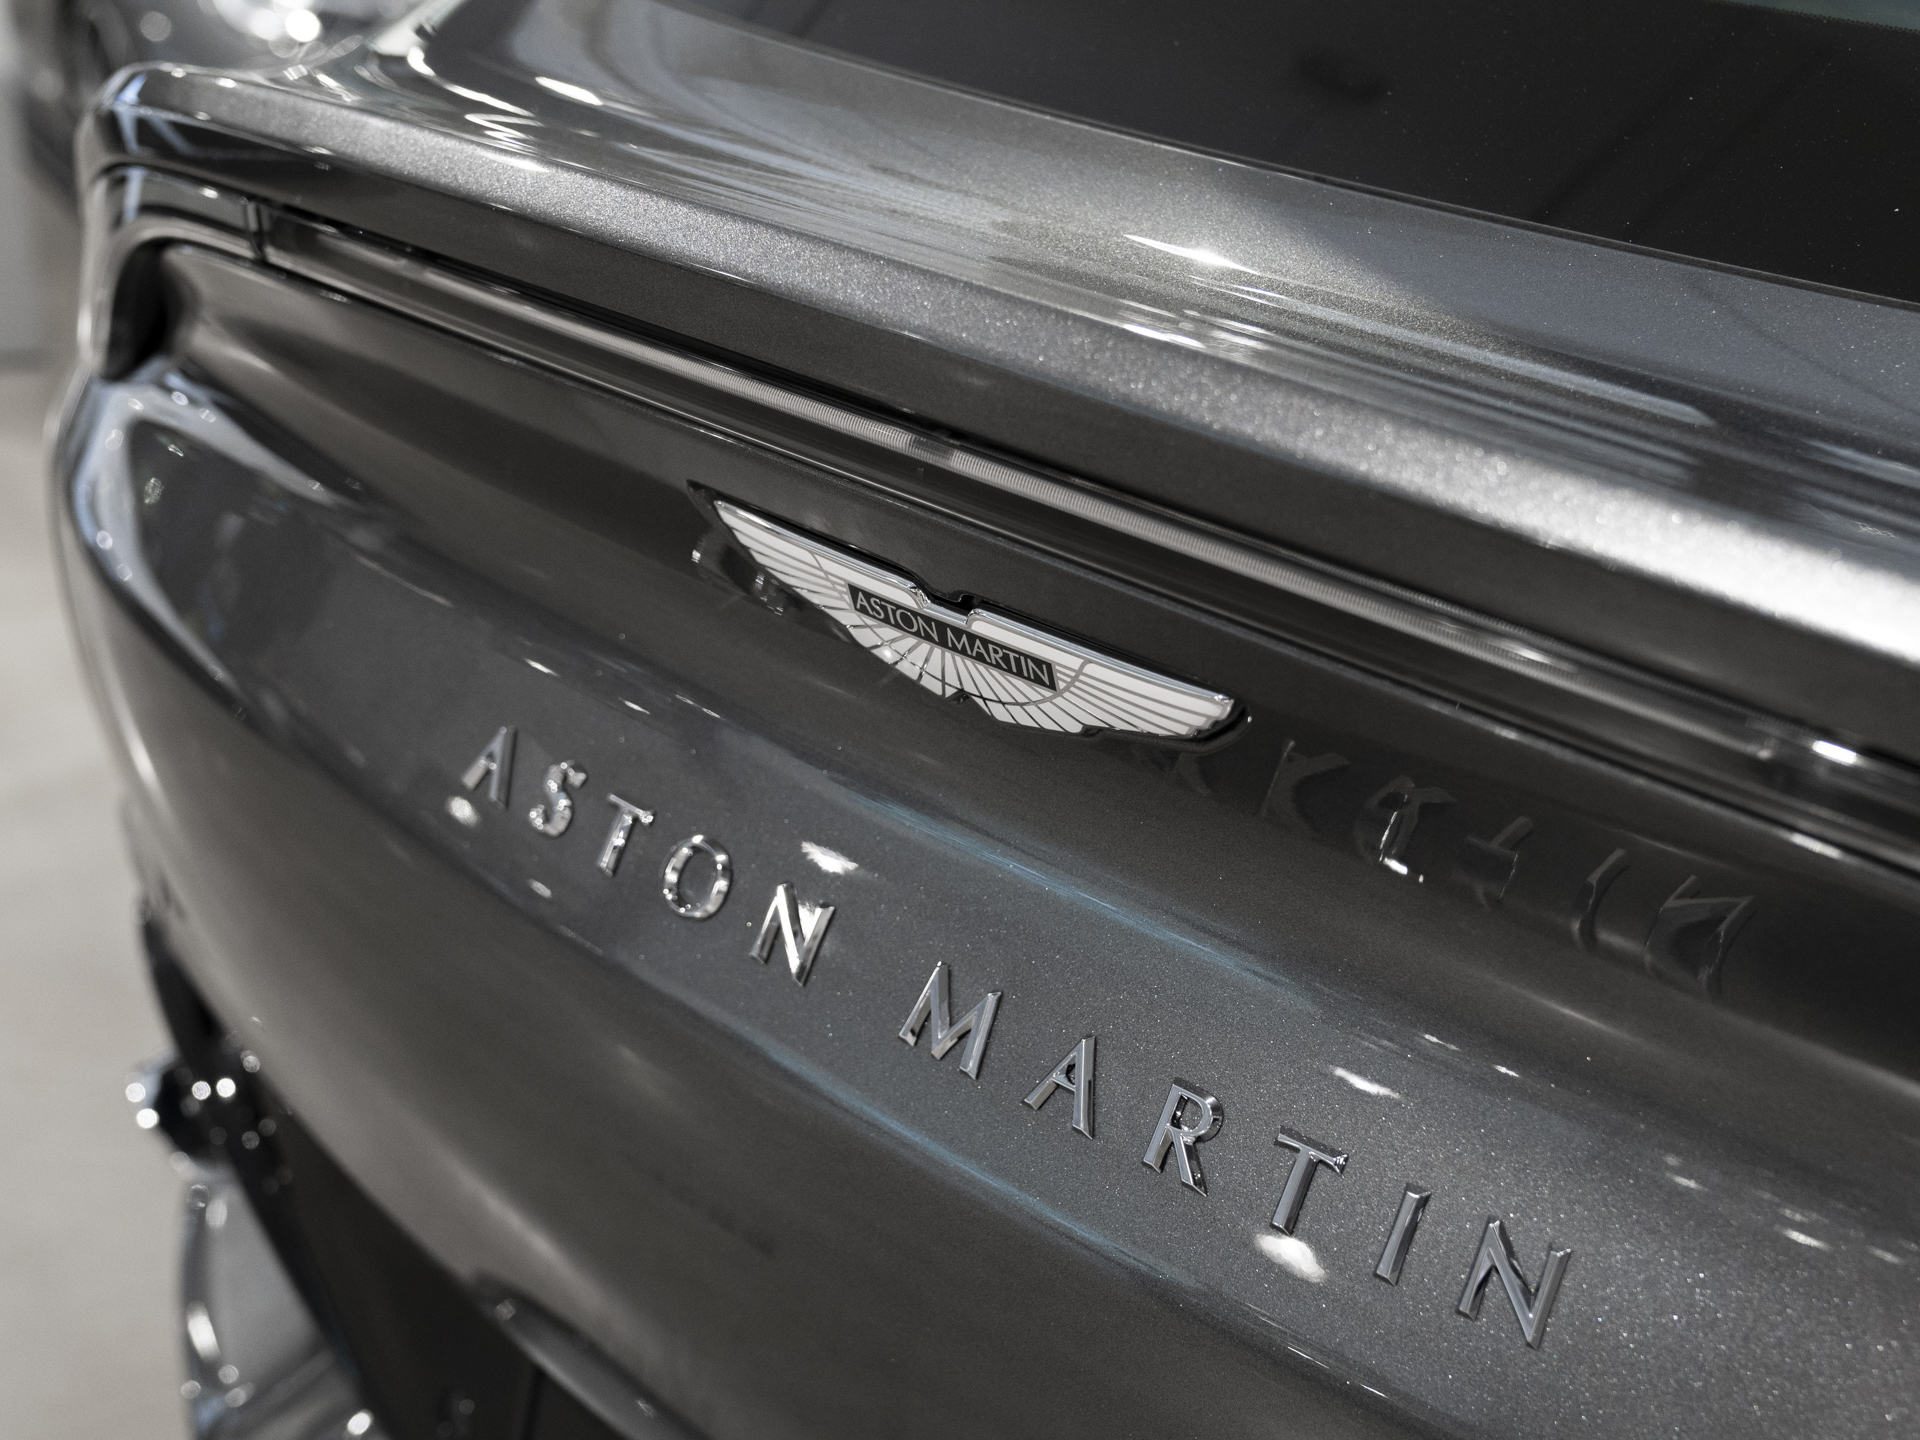 Aston Martin DBX - Aston Martin Hamburg 